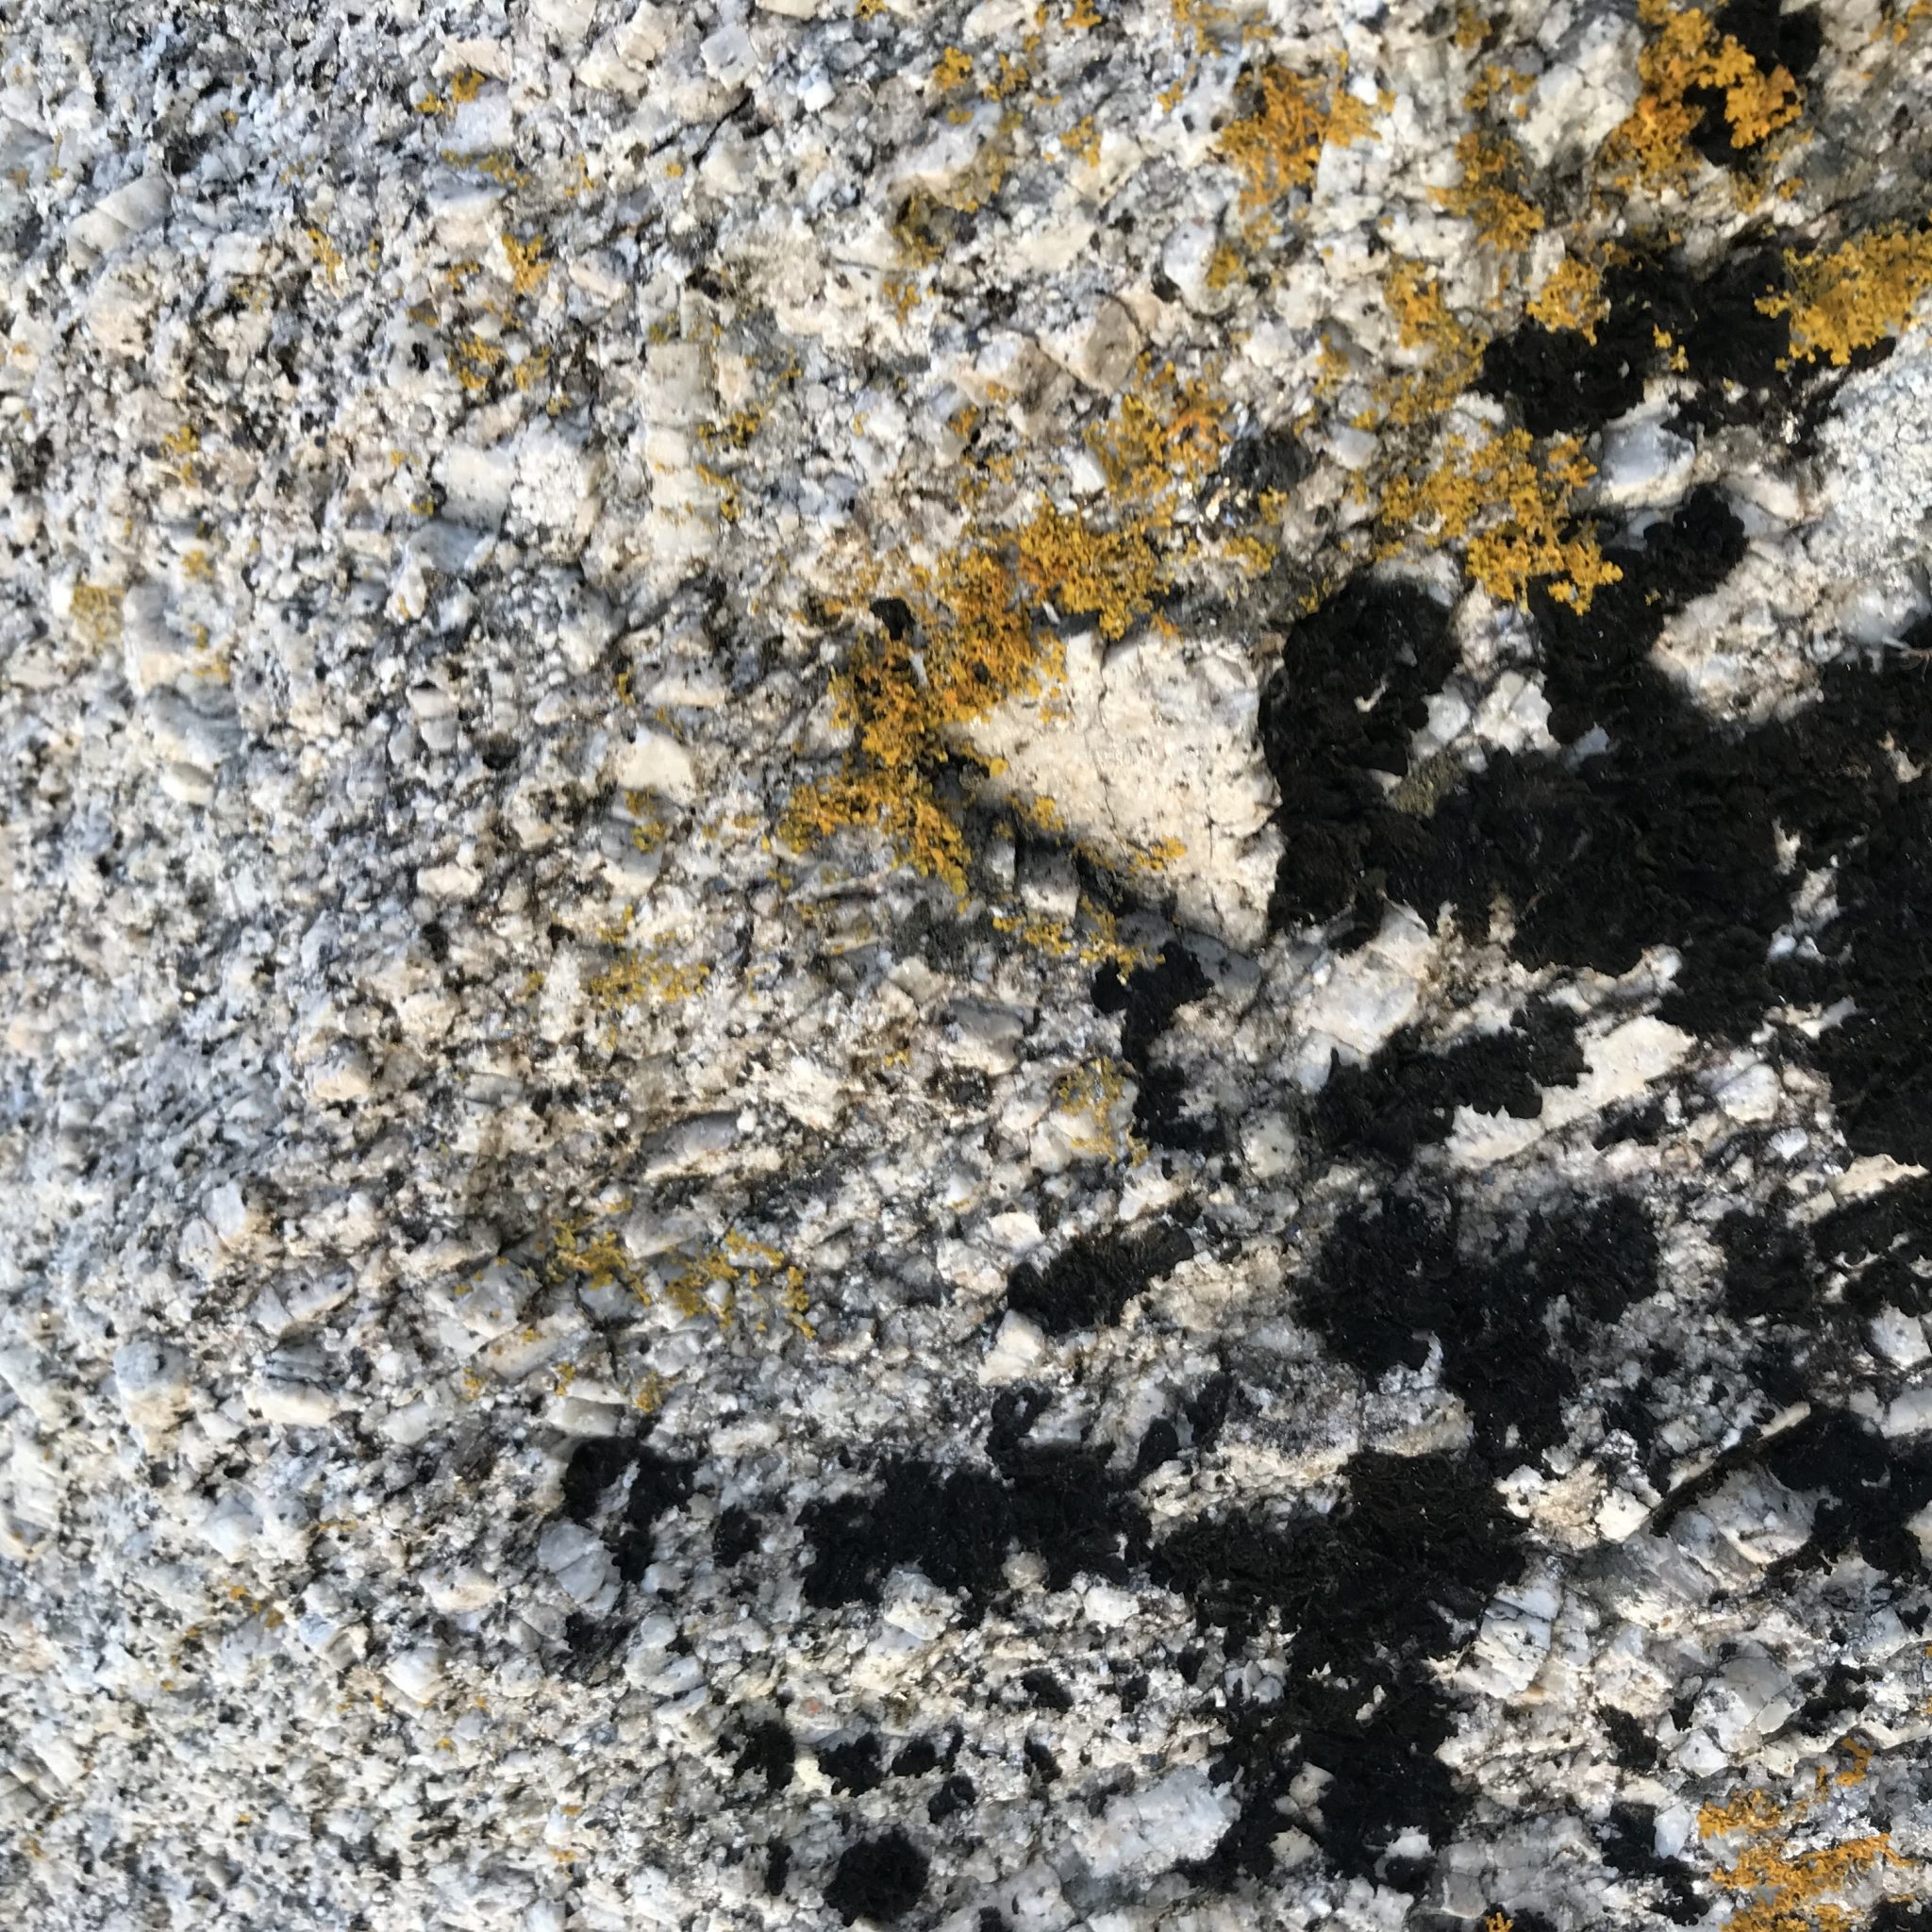  Moss-covered rock, detail. Images by Lucie and Luke Meier, shot in Zermatt, Switzerland.